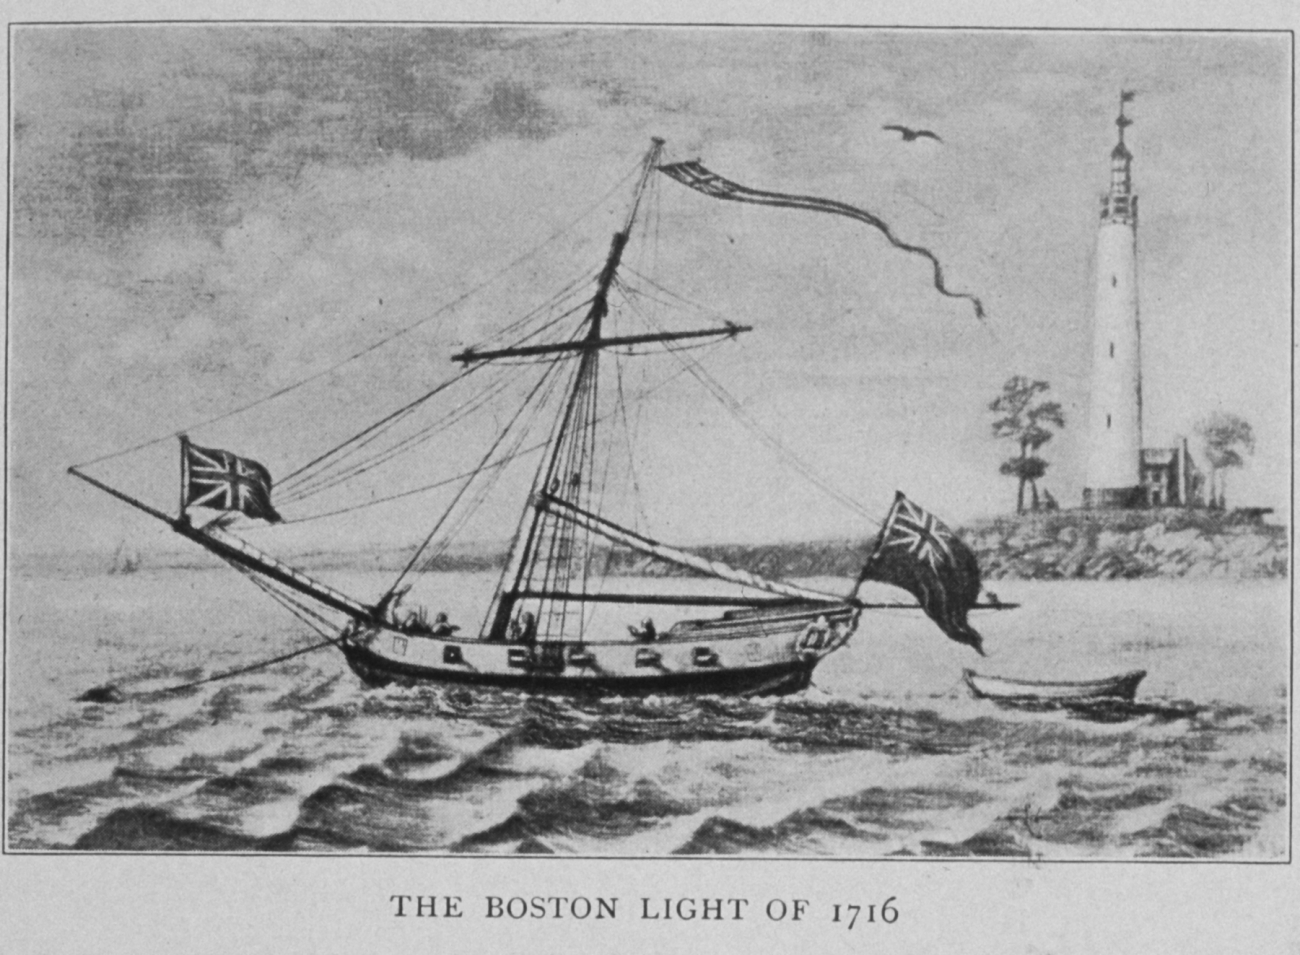 The Boston Light of 1716